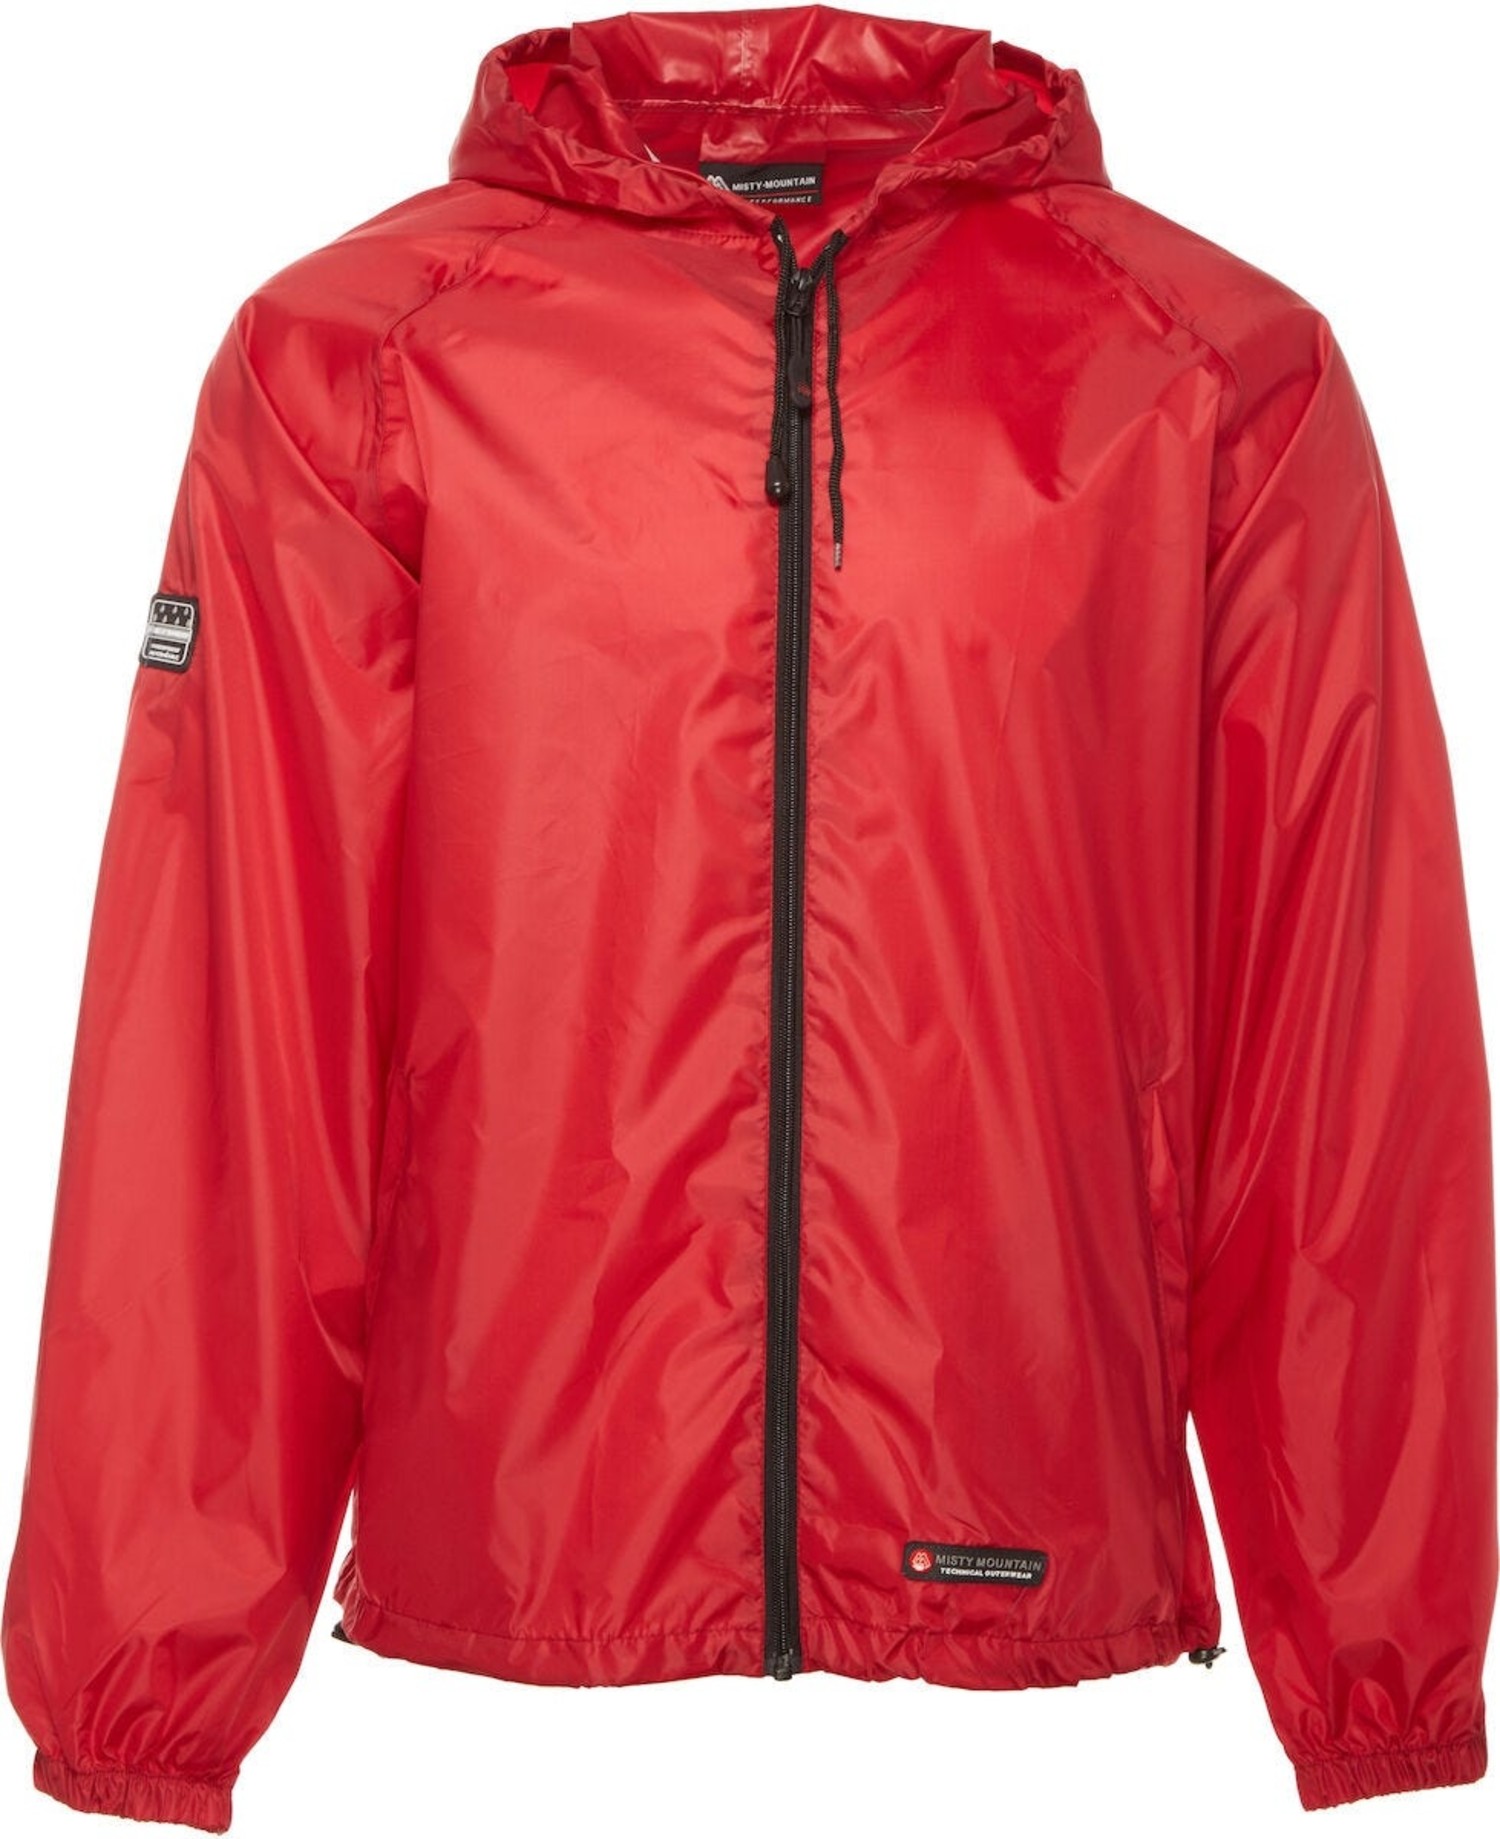 Misty Mountain Ultralight Unisex Packable Rain Jacket- Red